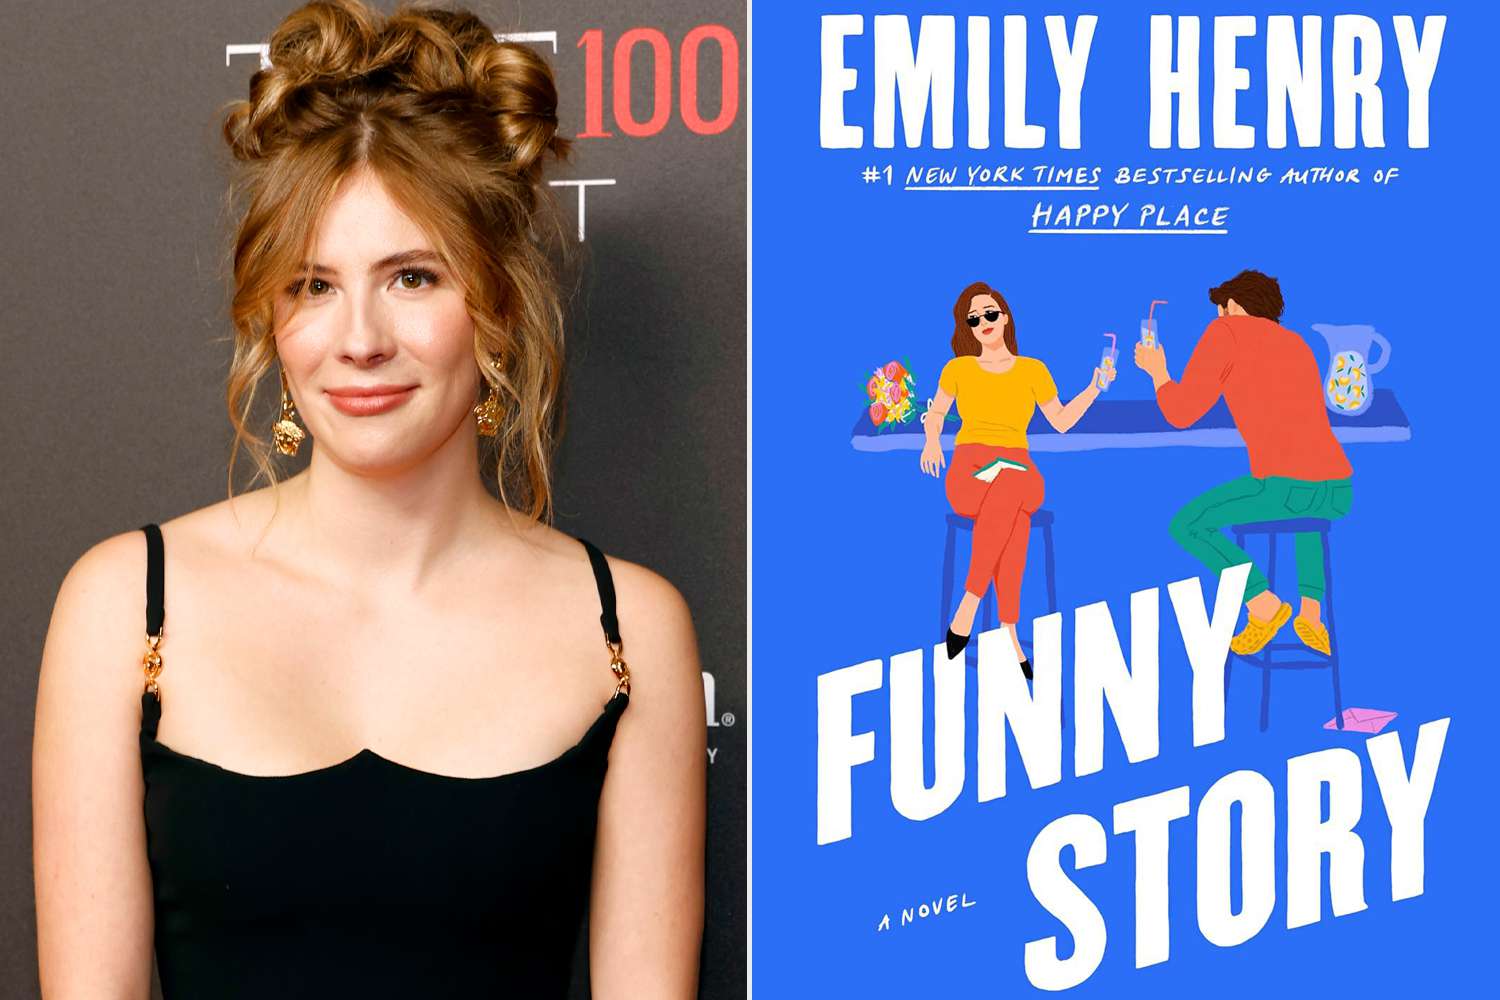 Emily Henry’s Romantic Novel “Funny Story” to Get Movie Adaptation